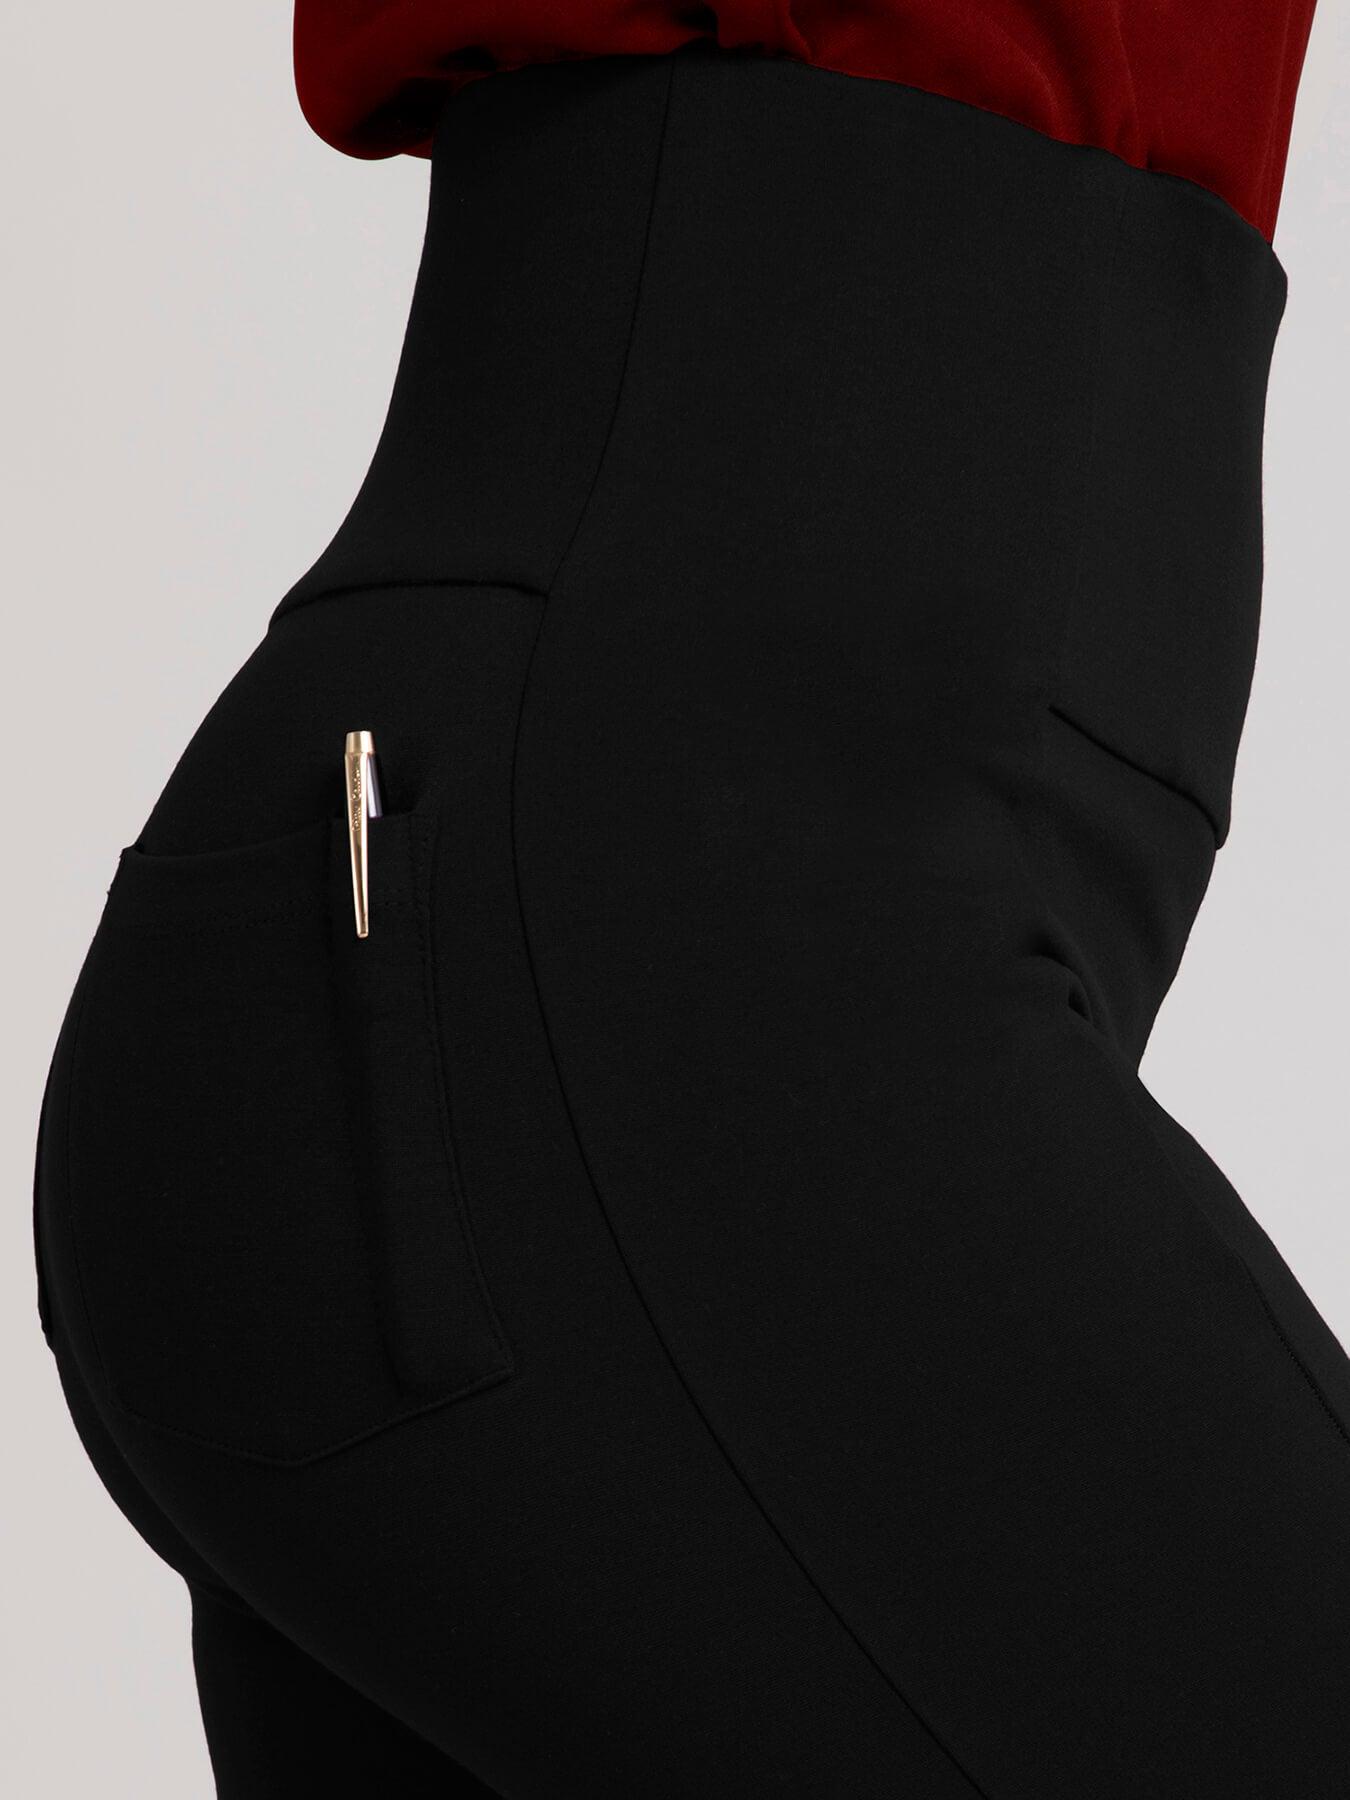 4 Way Stretch High Waist Tummy Tuck LivIn Pants - Black| Formal Trousers